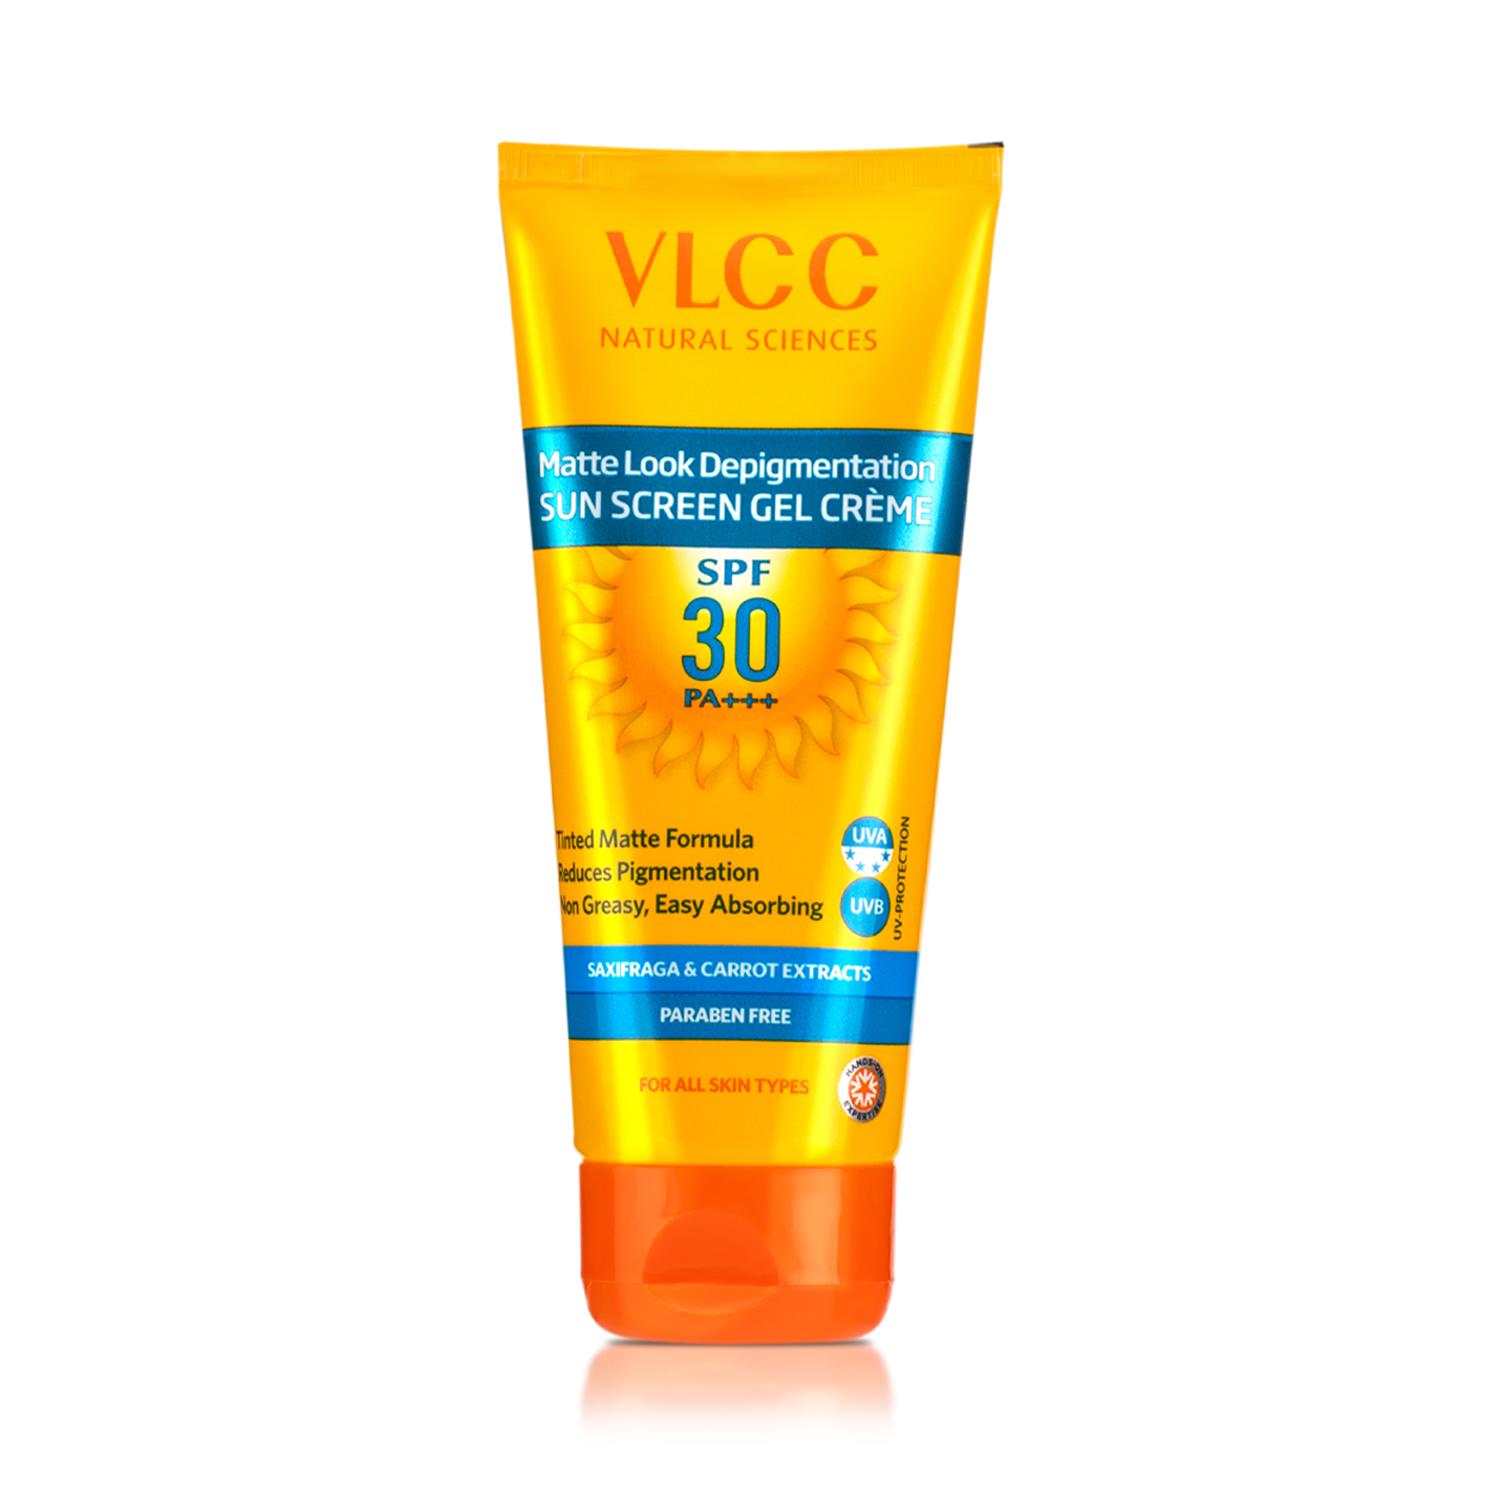 VLCC | VLCC Matte Look Depigmentation Sunscreen Gel Creme SPF 30 (100g)